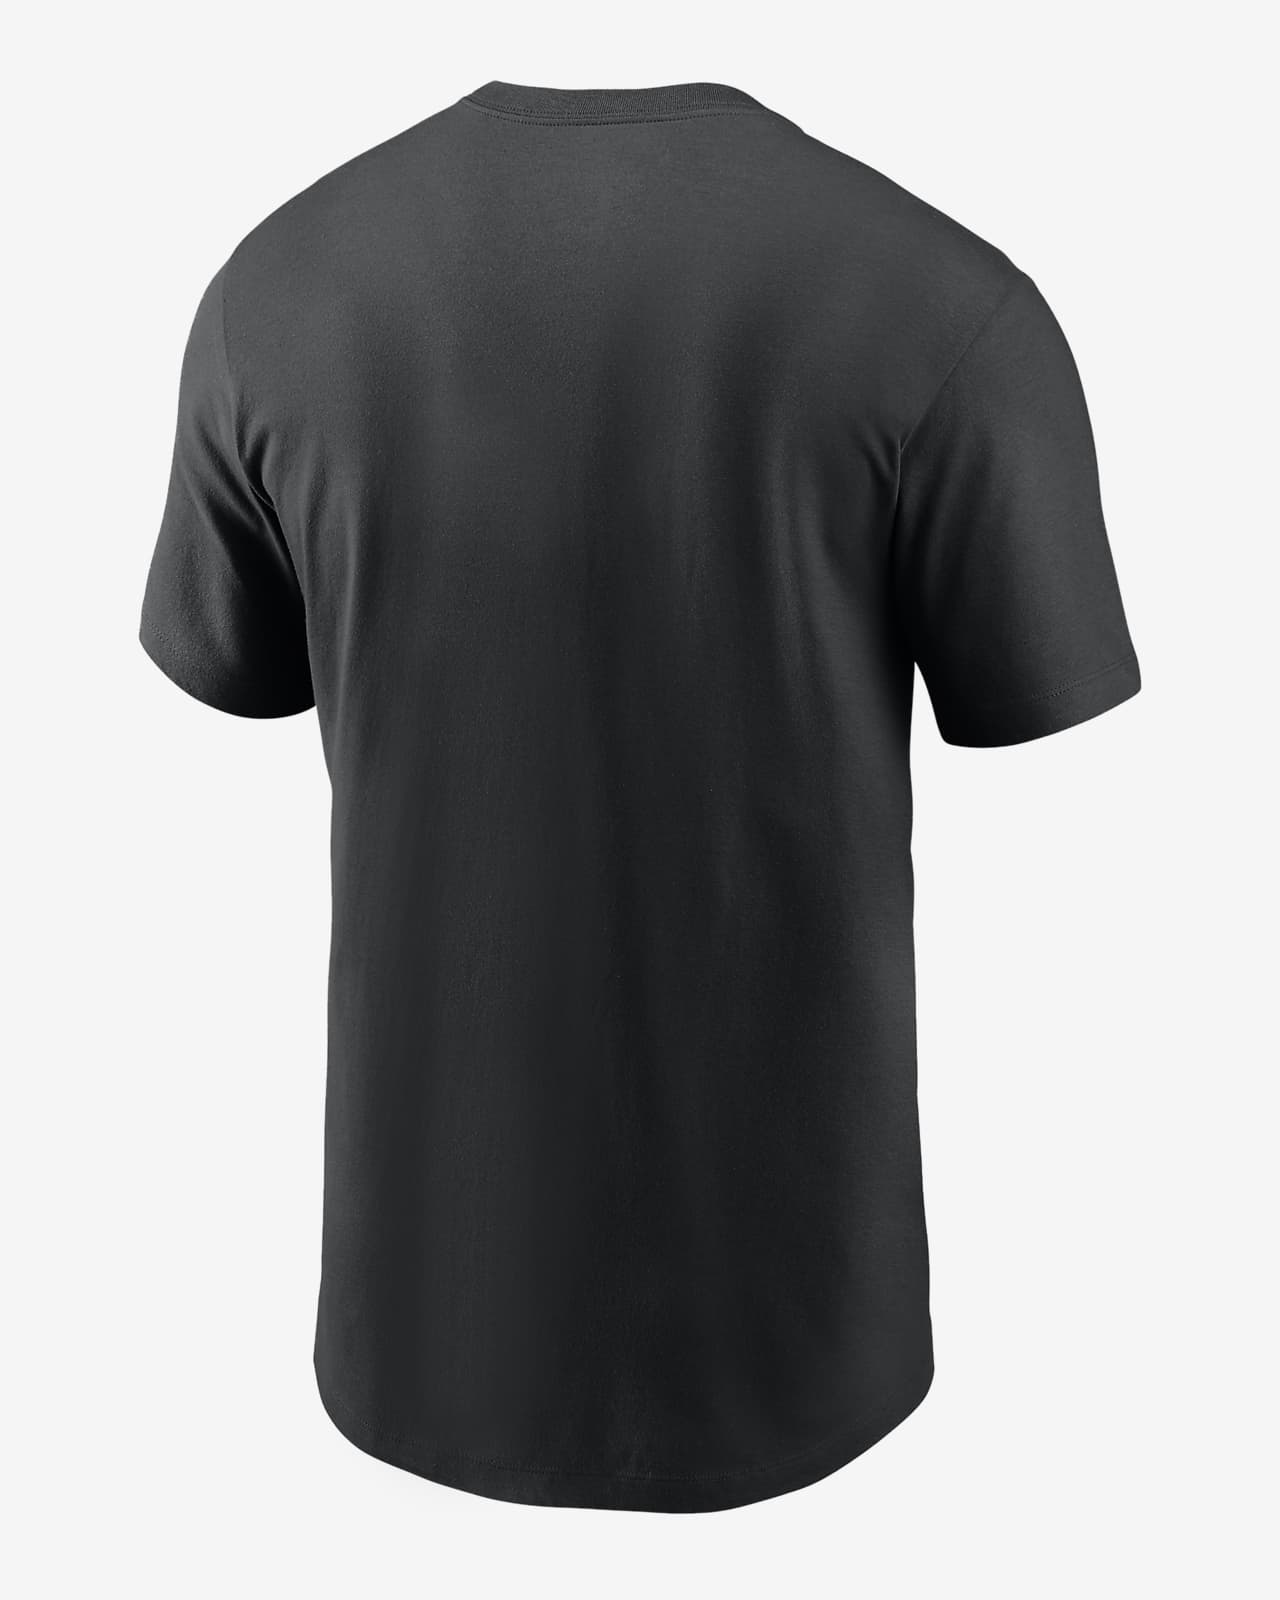 Arizona Cardinals Essential Blitz Lockup Men's Nike NFL T-Shirt.